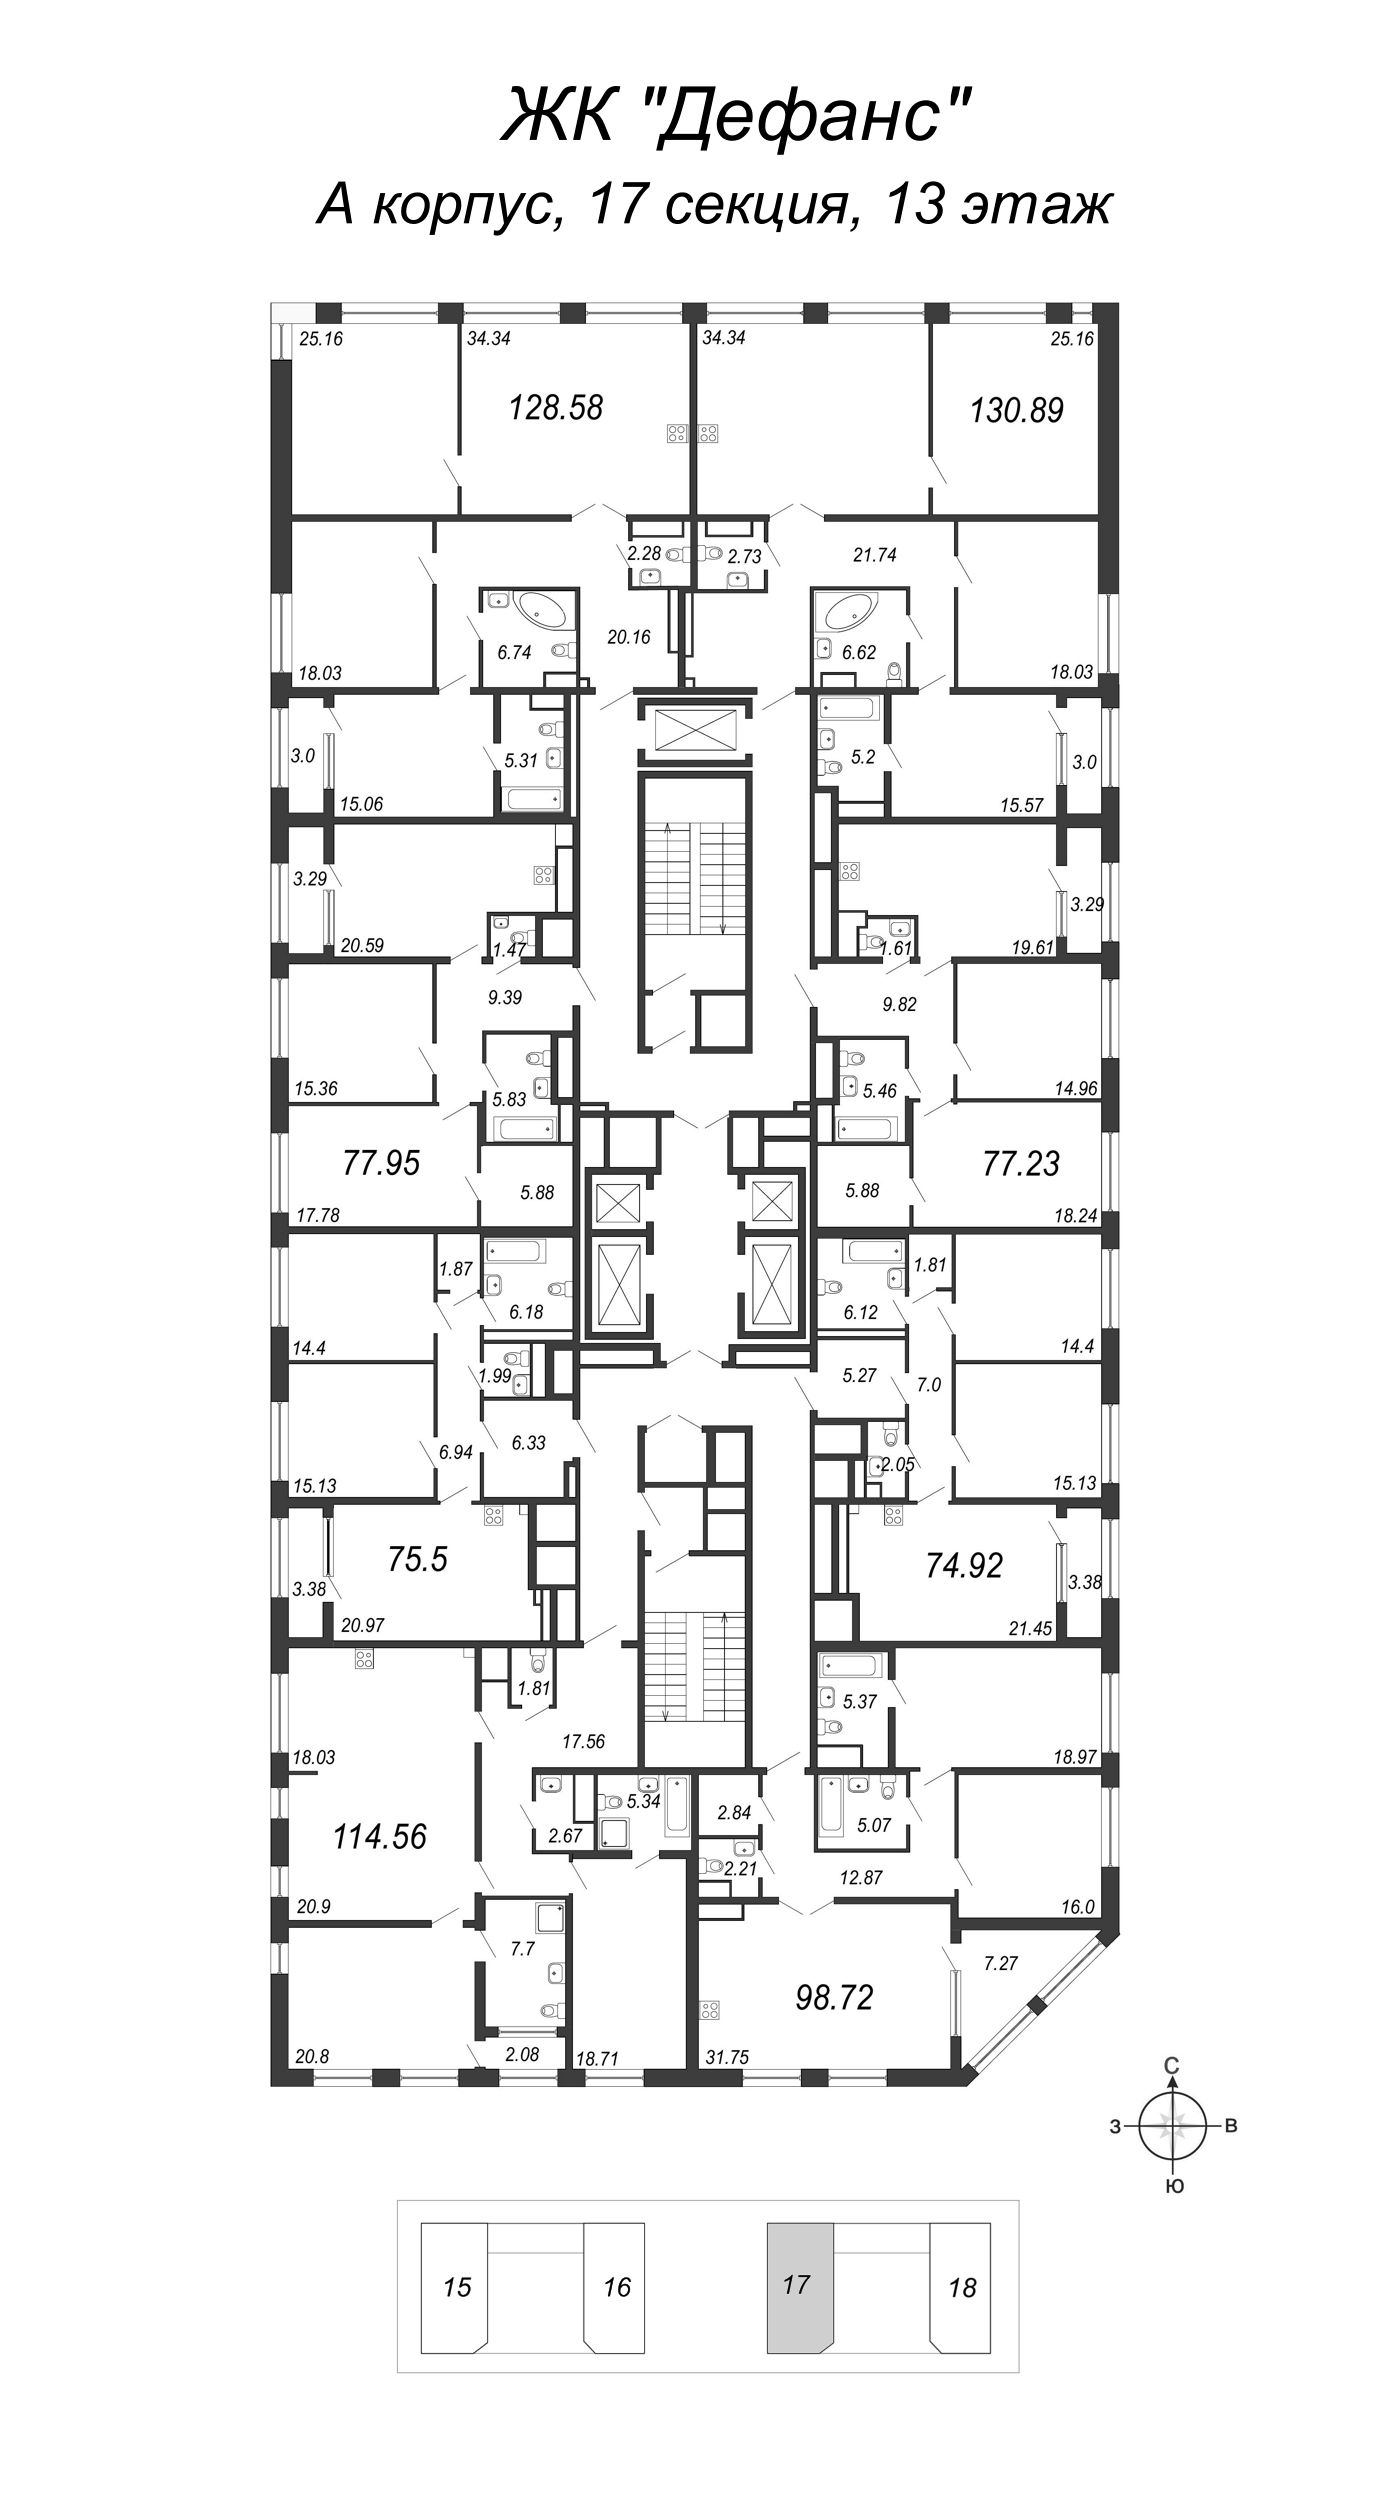 3-комнатная (Евро) квартира, 74.92 м² - планировка этажа